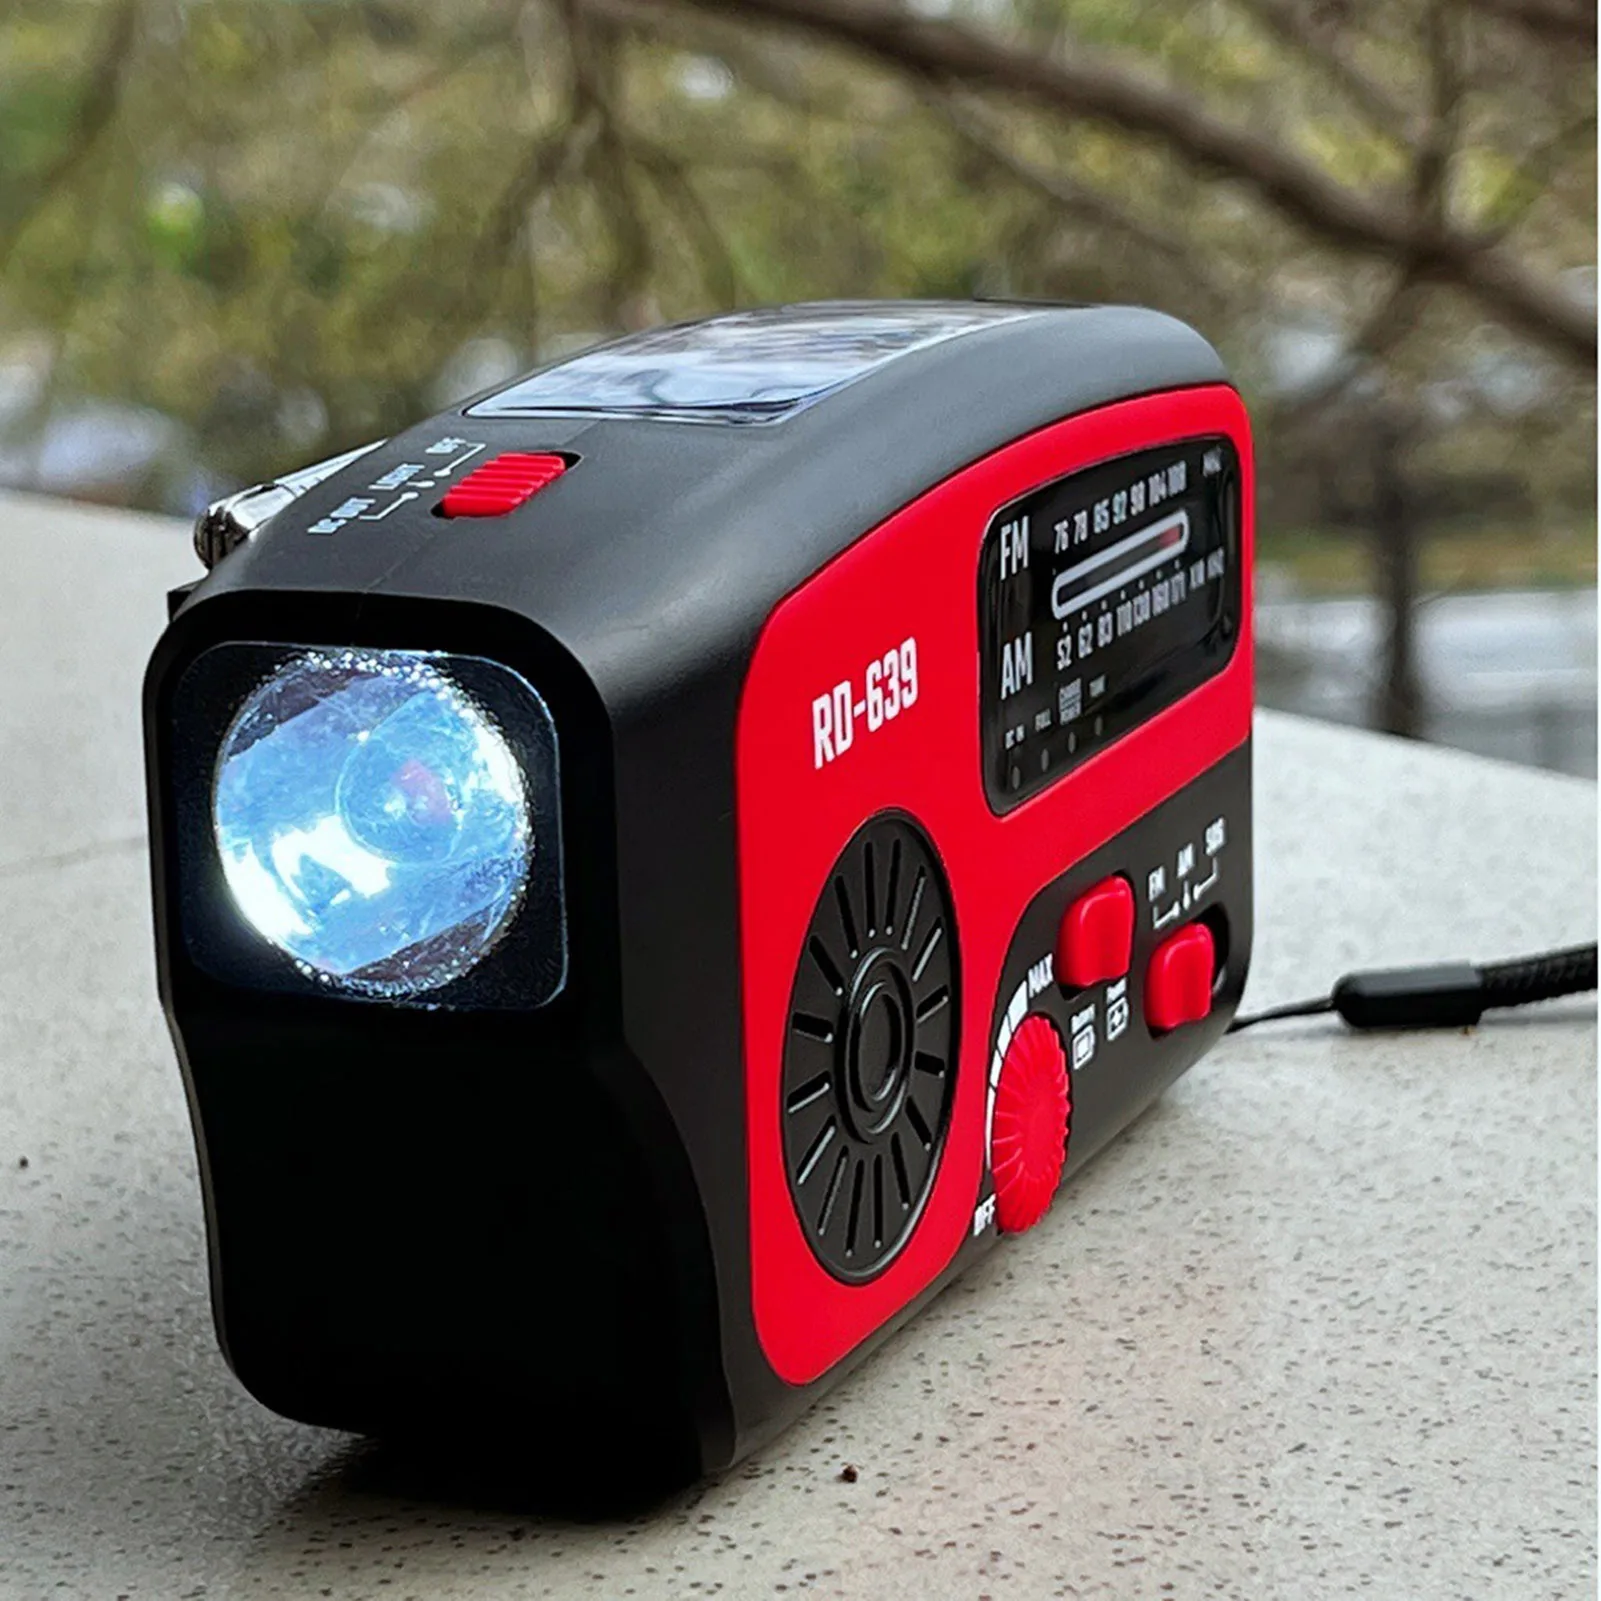 

Weather Alert Radio AM/FM Solar Hand Crank Survival Gear Portable Radio LED Flashlight Reading Lamp SOS Alarm 1200mAh Power Bank